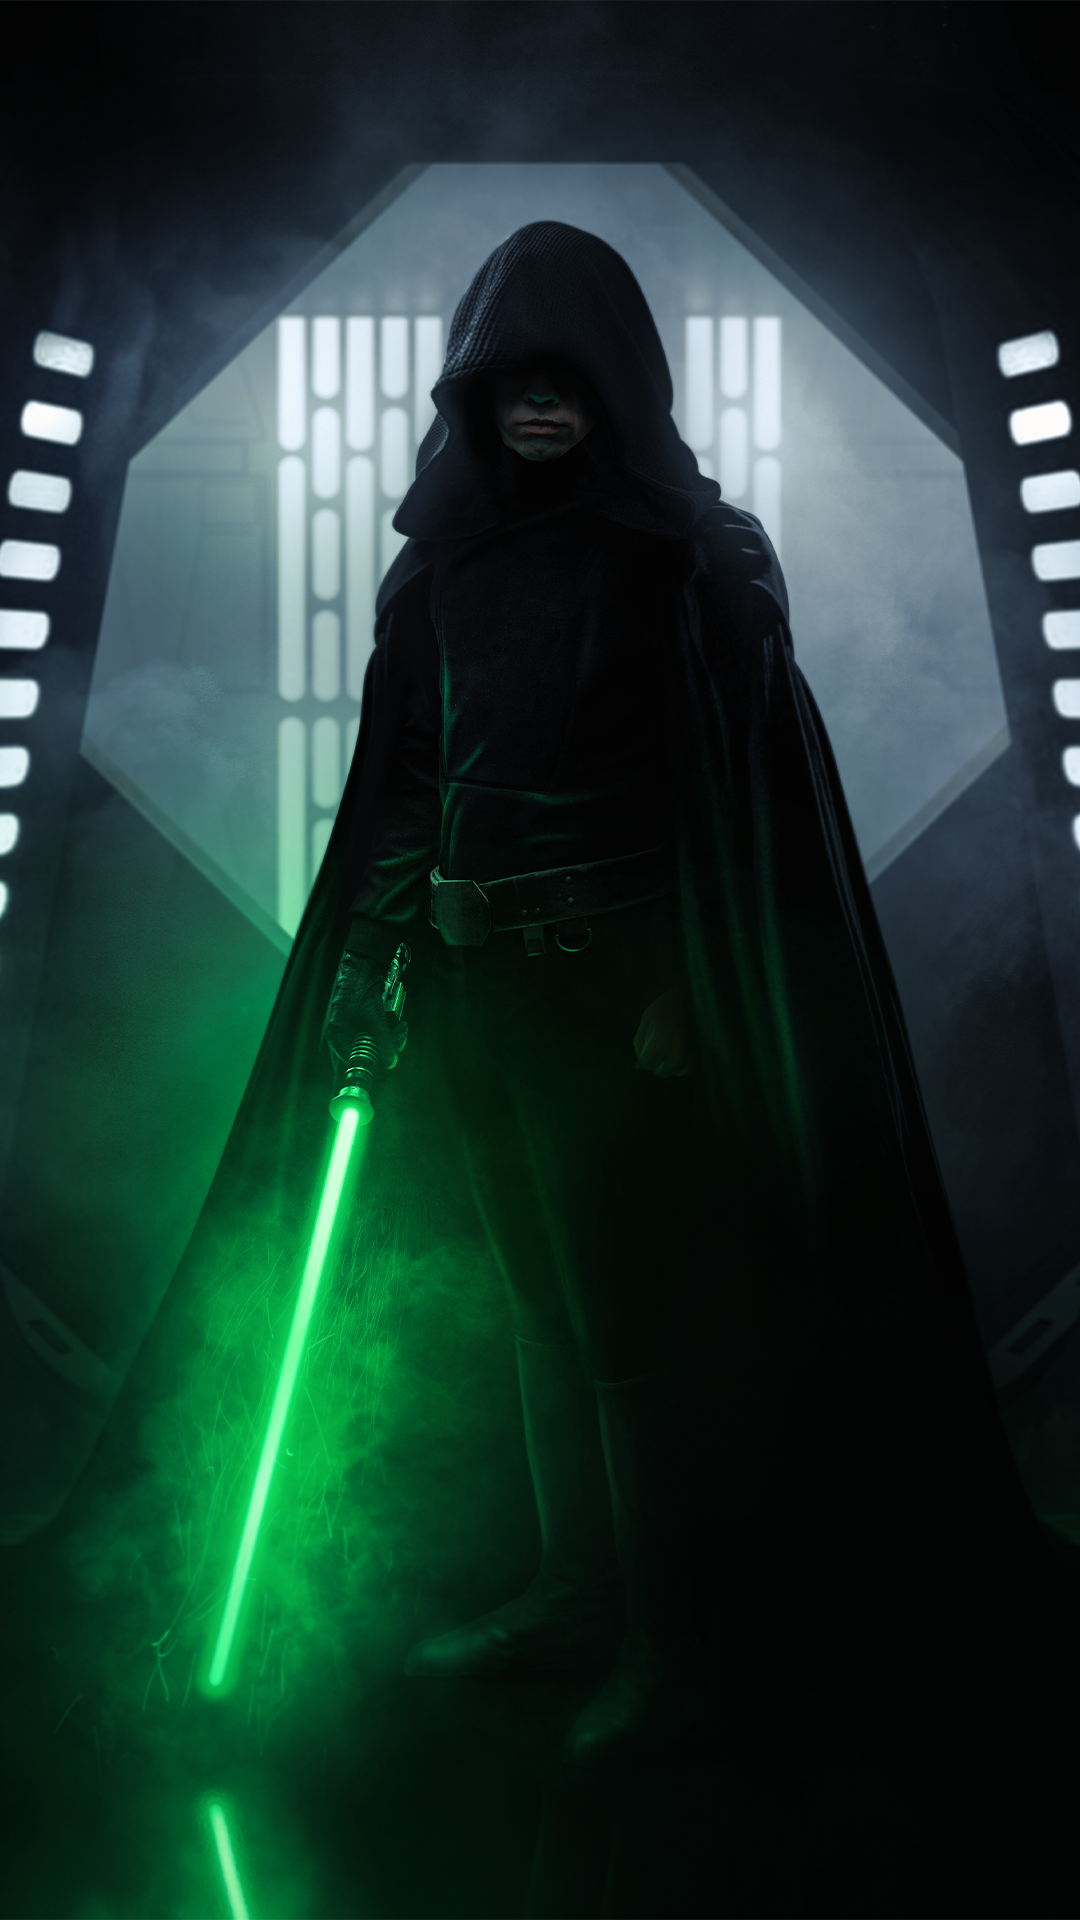 Luke Skywalker Wallpaper. Star wars background, Star wars picture, Star wars image